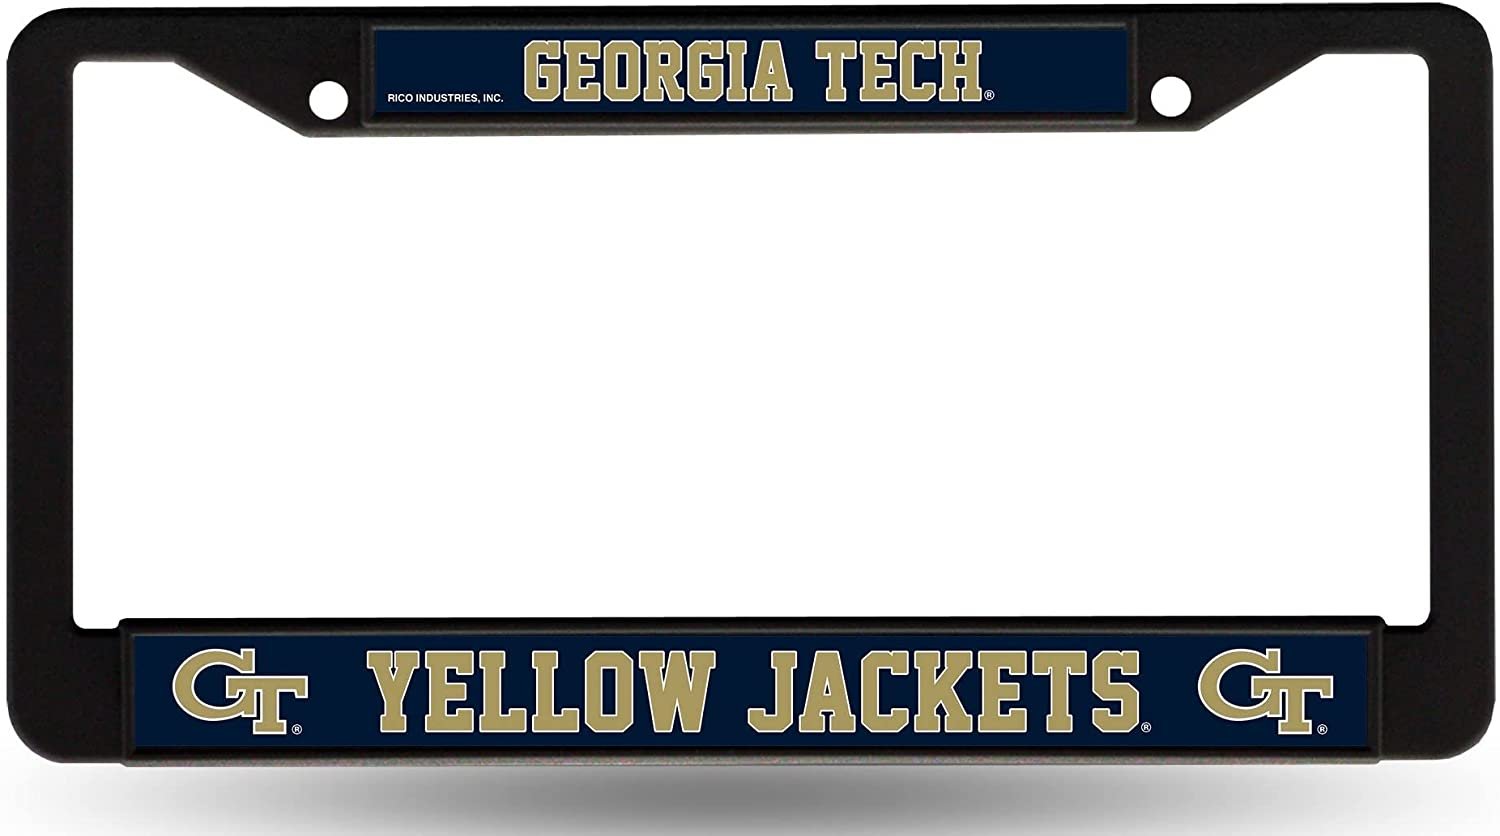 Georgia Tech Yellow Jackets License Plate Tag Frame Cover Black Plastic University